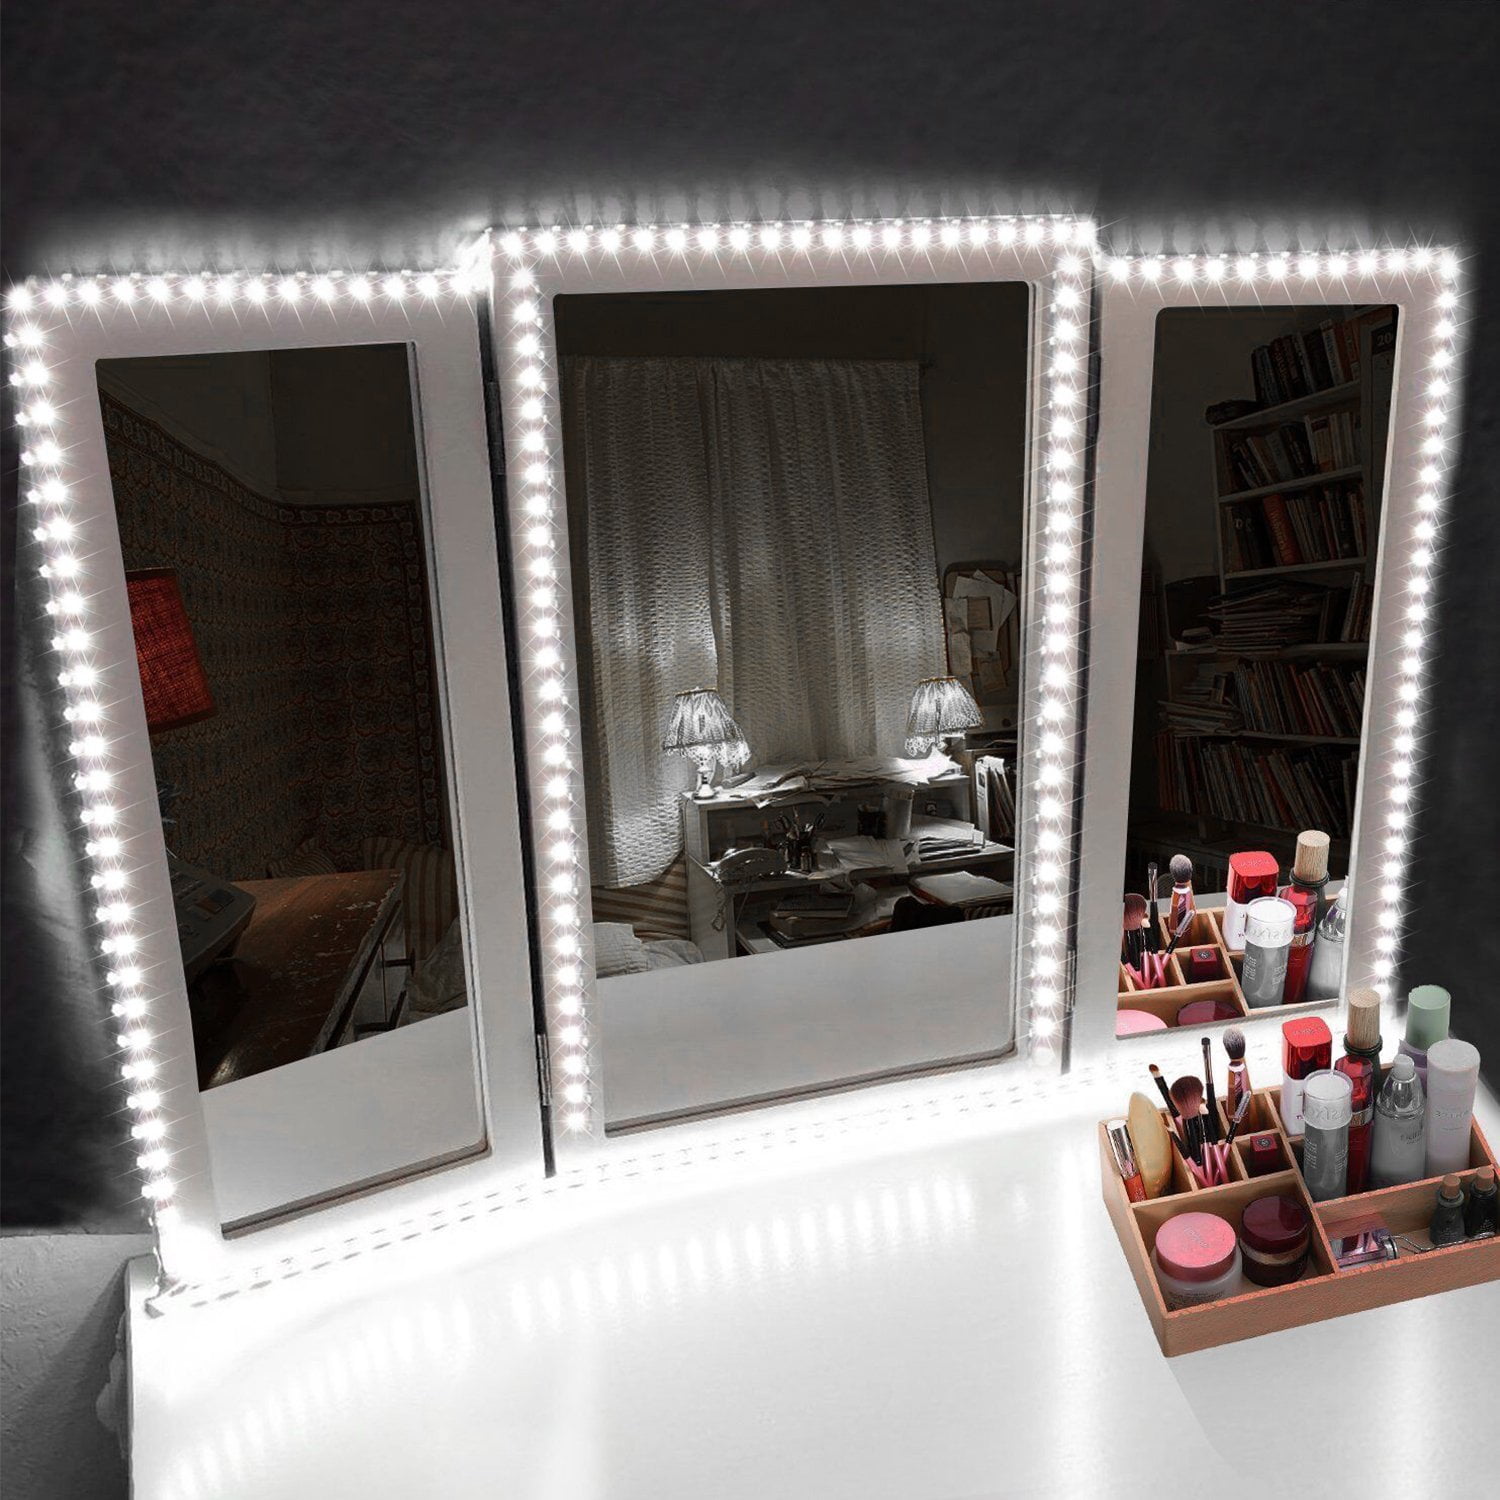 Led Vanity Mirror Lights Kit 13ft, How To Make Makeup Vanity With Lights